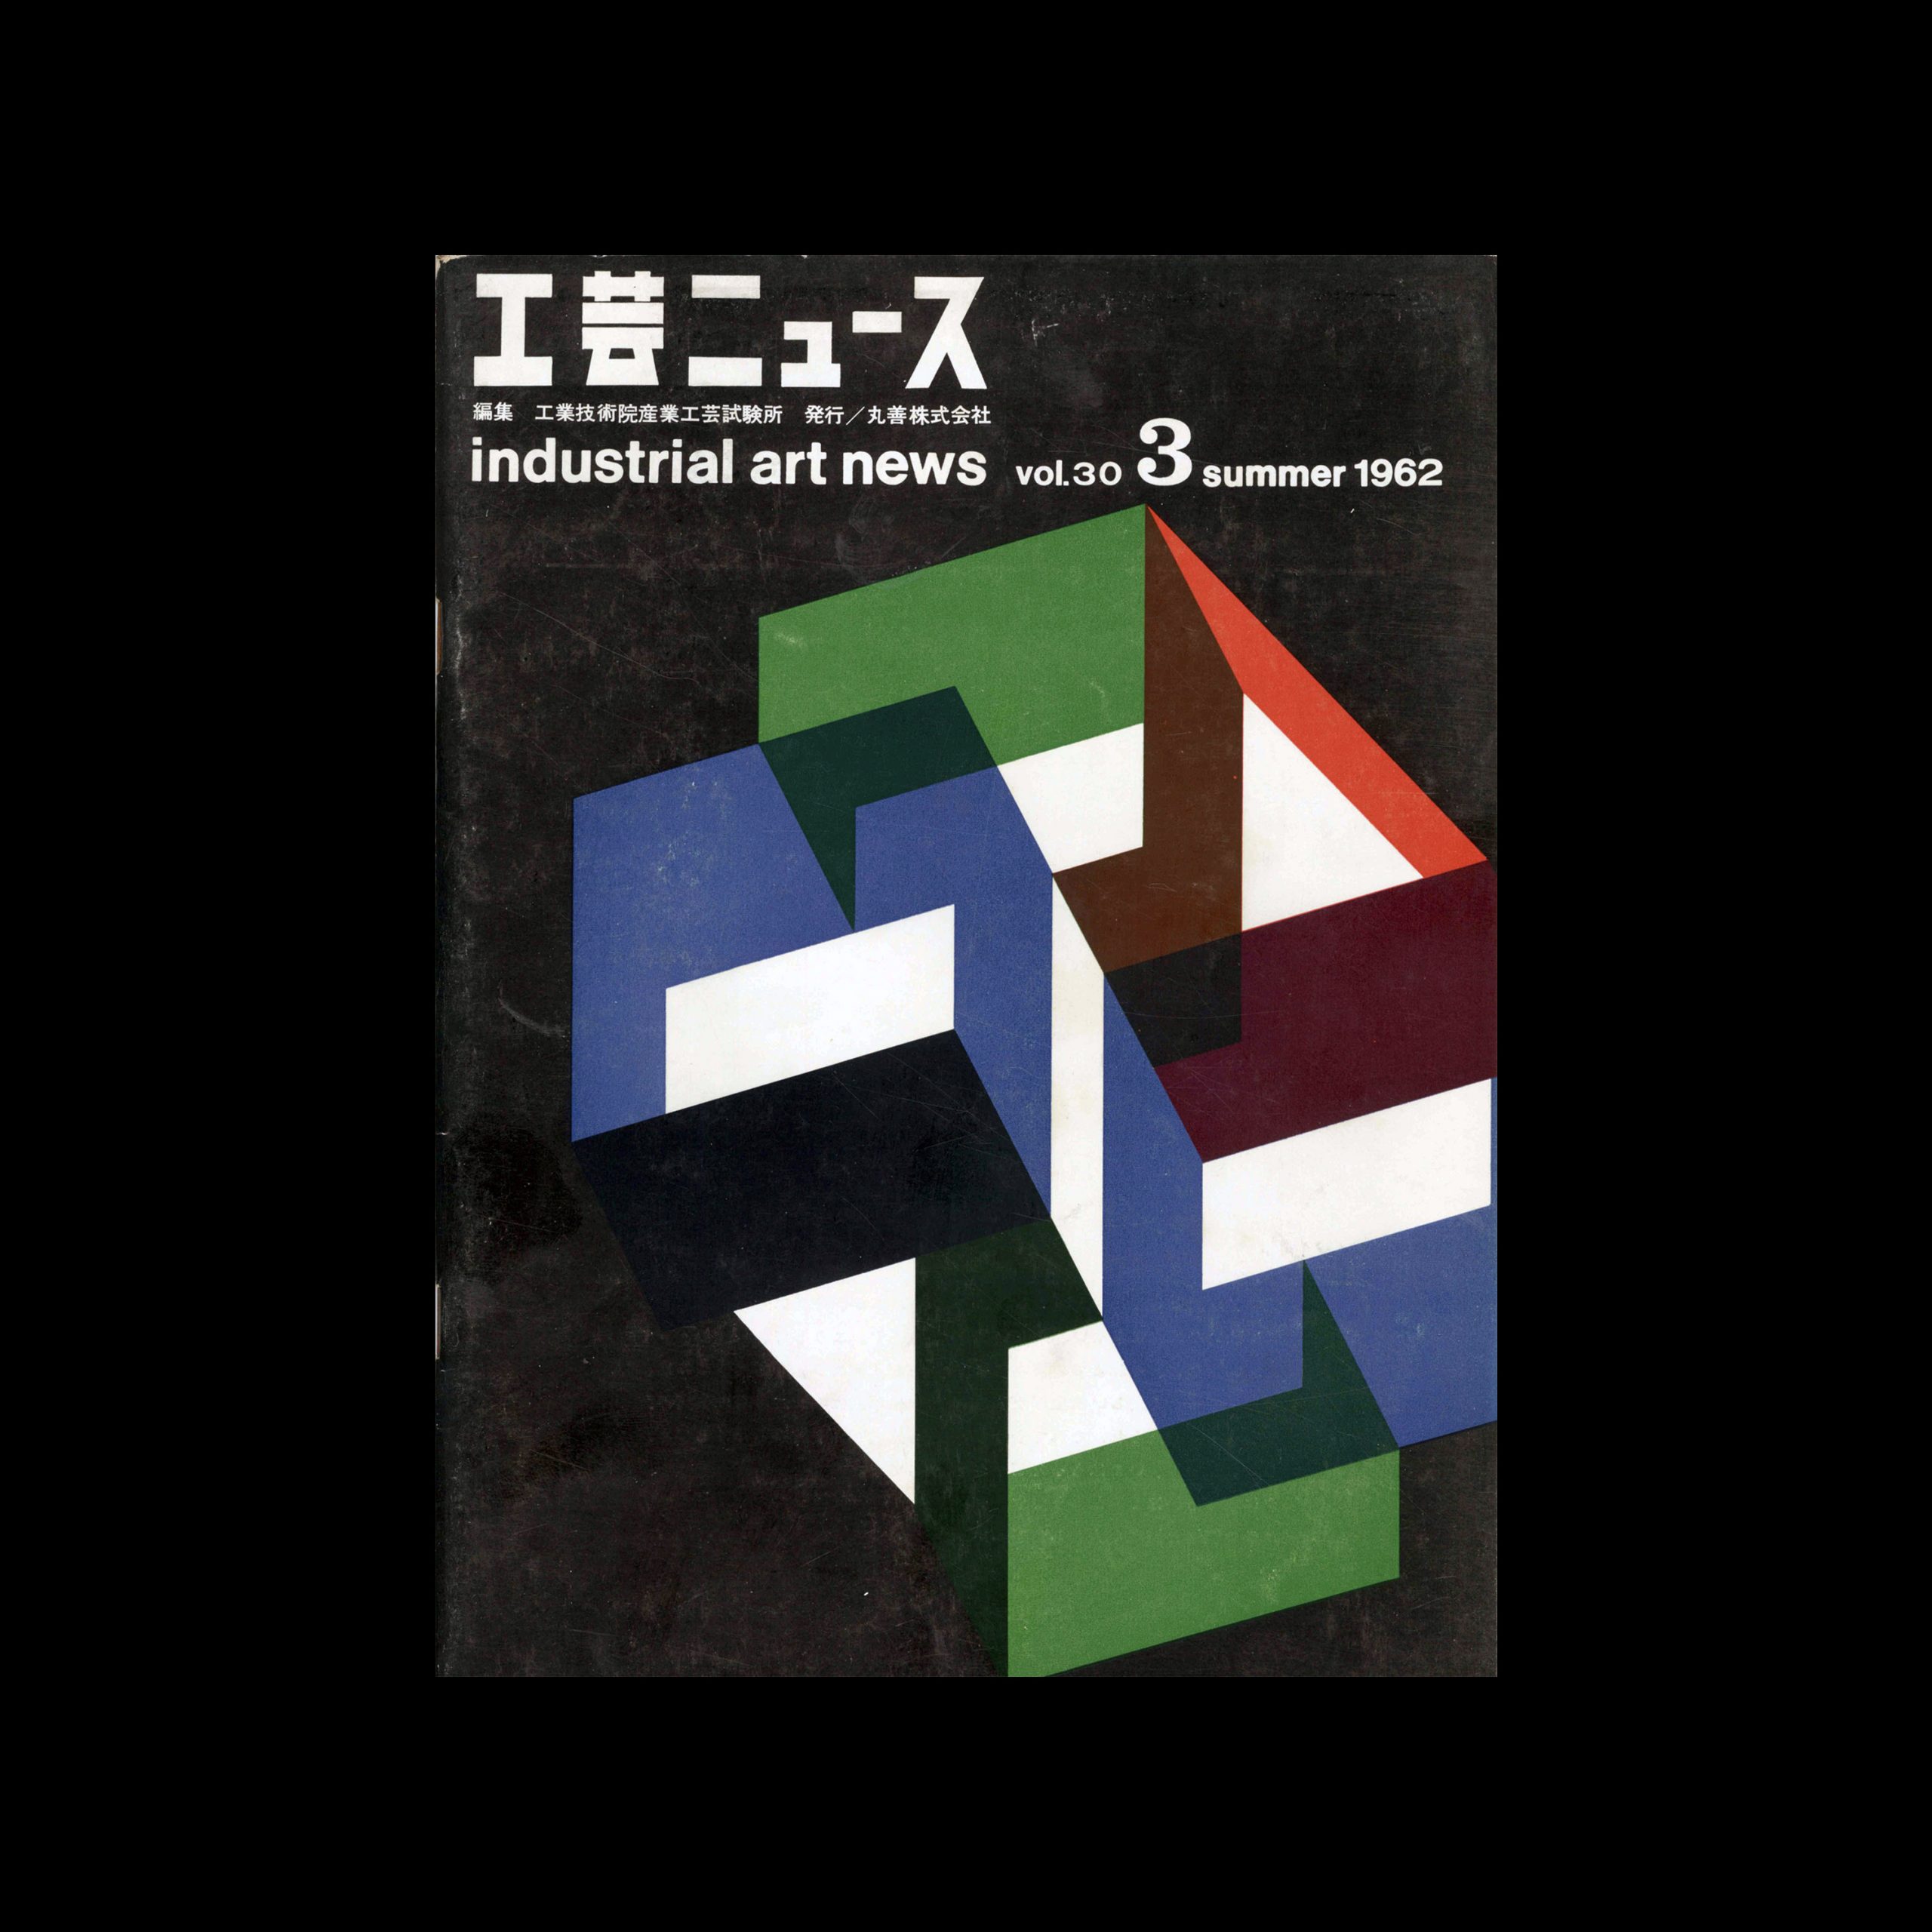 Industrial Art News – Vol. 30, No. 3, Summer 1962. Cover design by Toshihiro Katayama